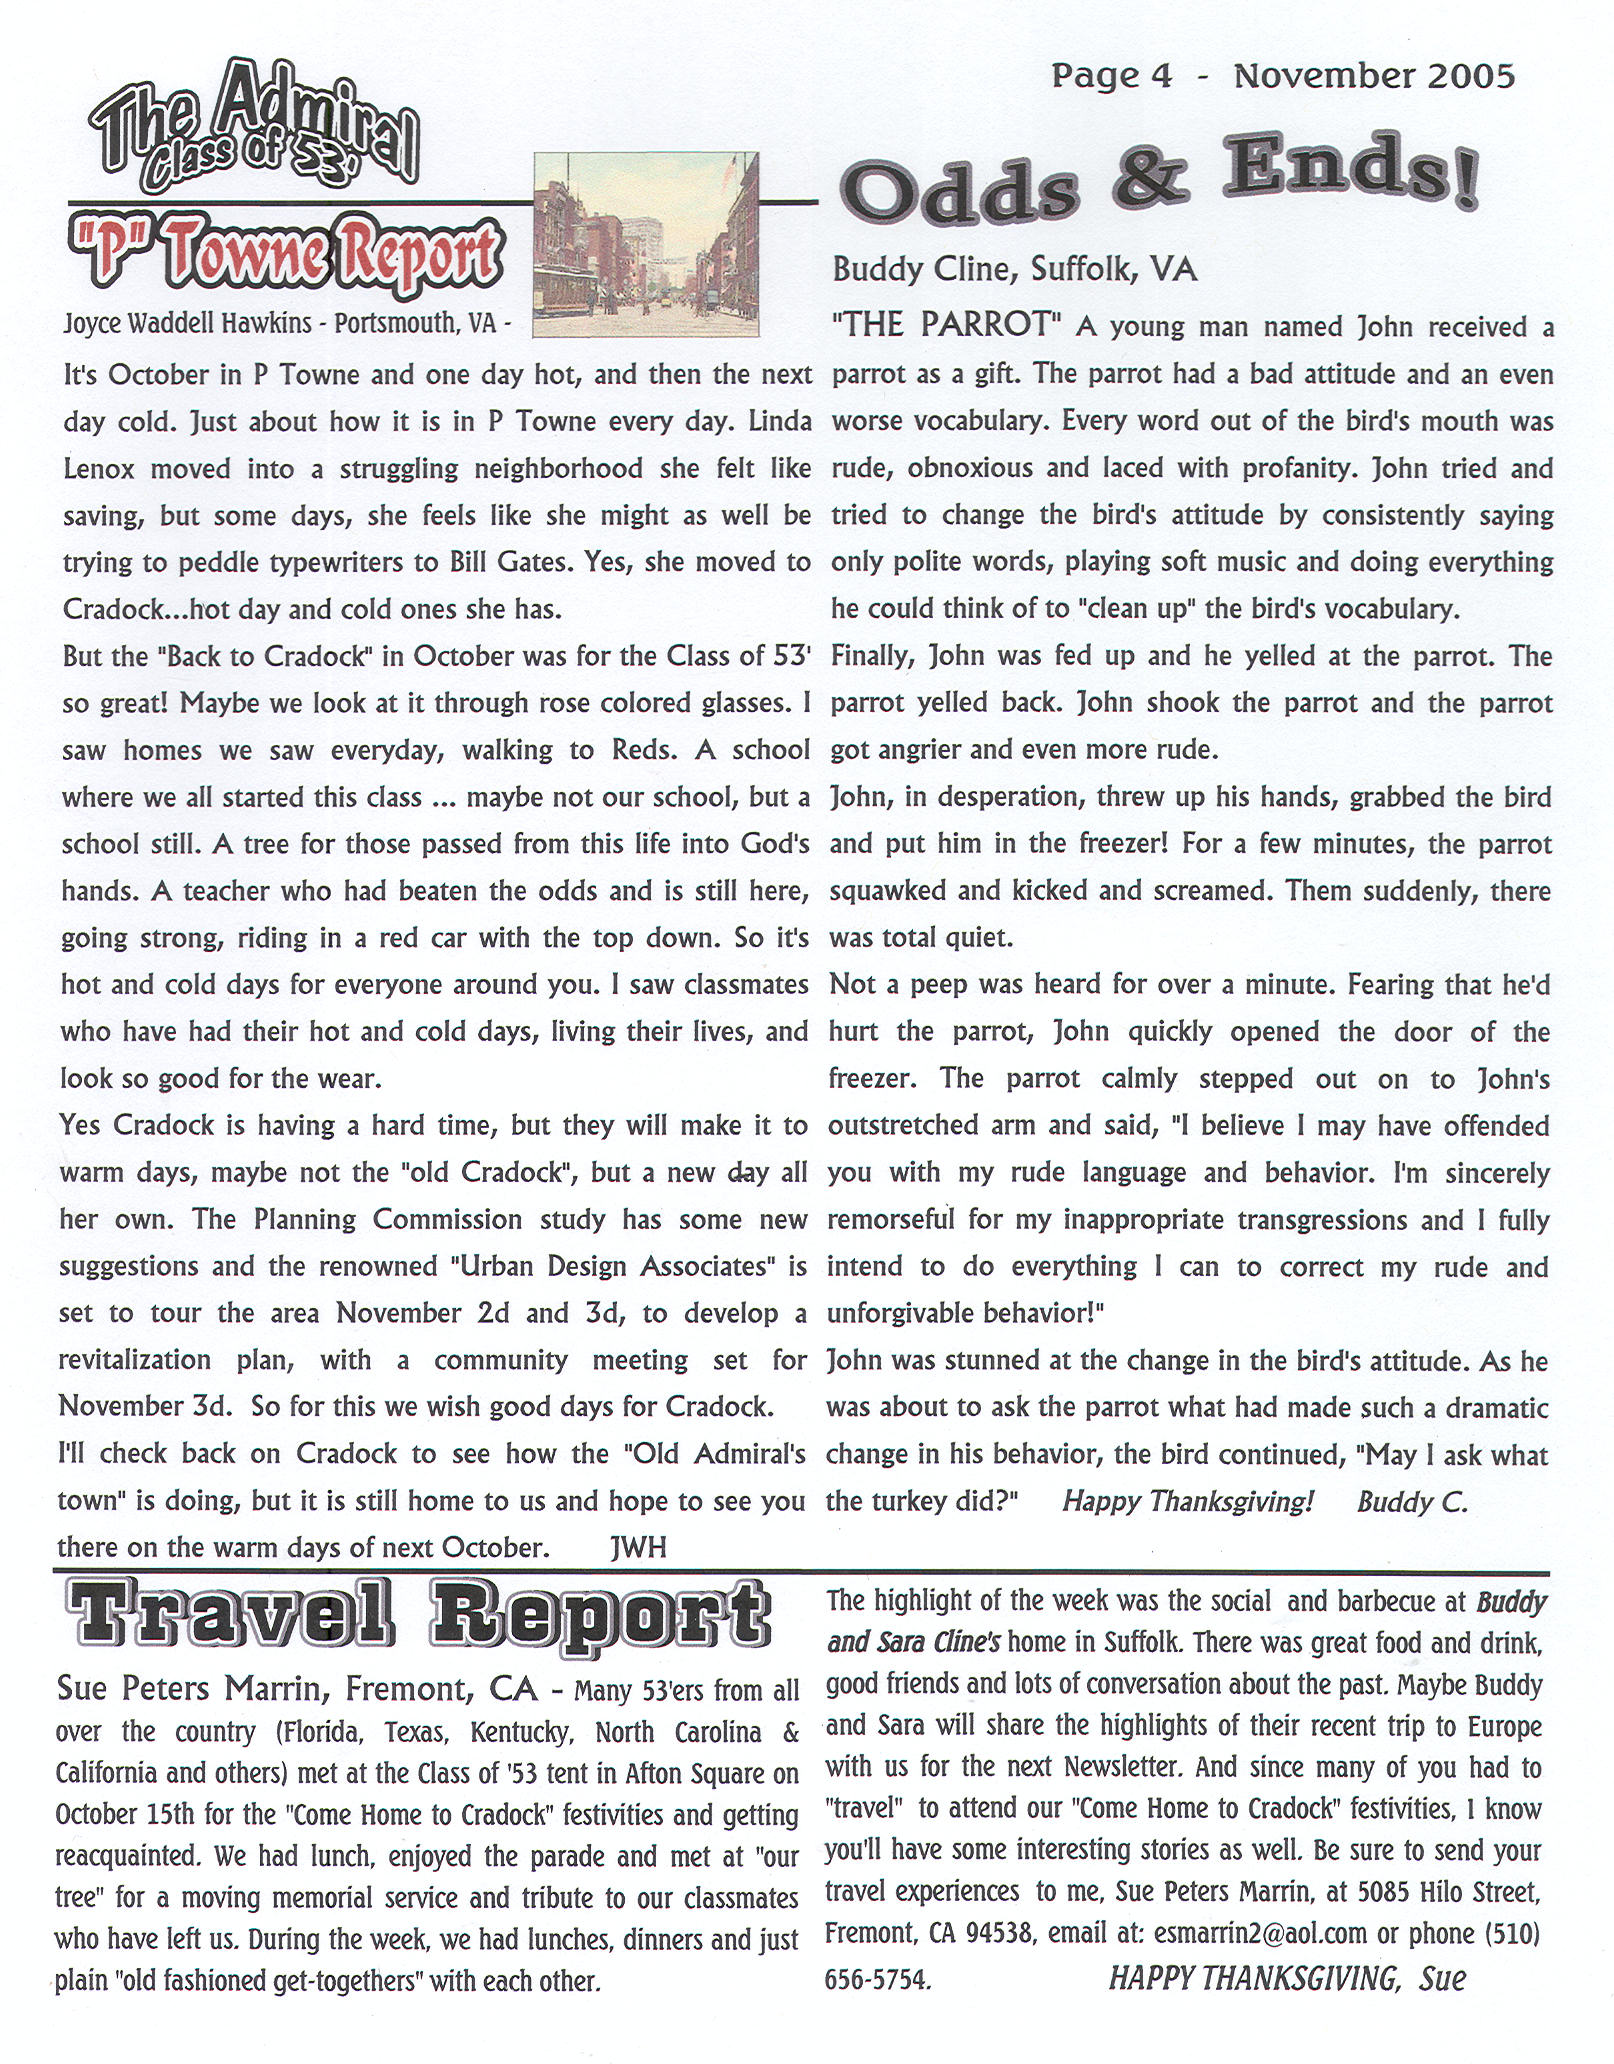 The Admiral - November 2005 - pg. 4